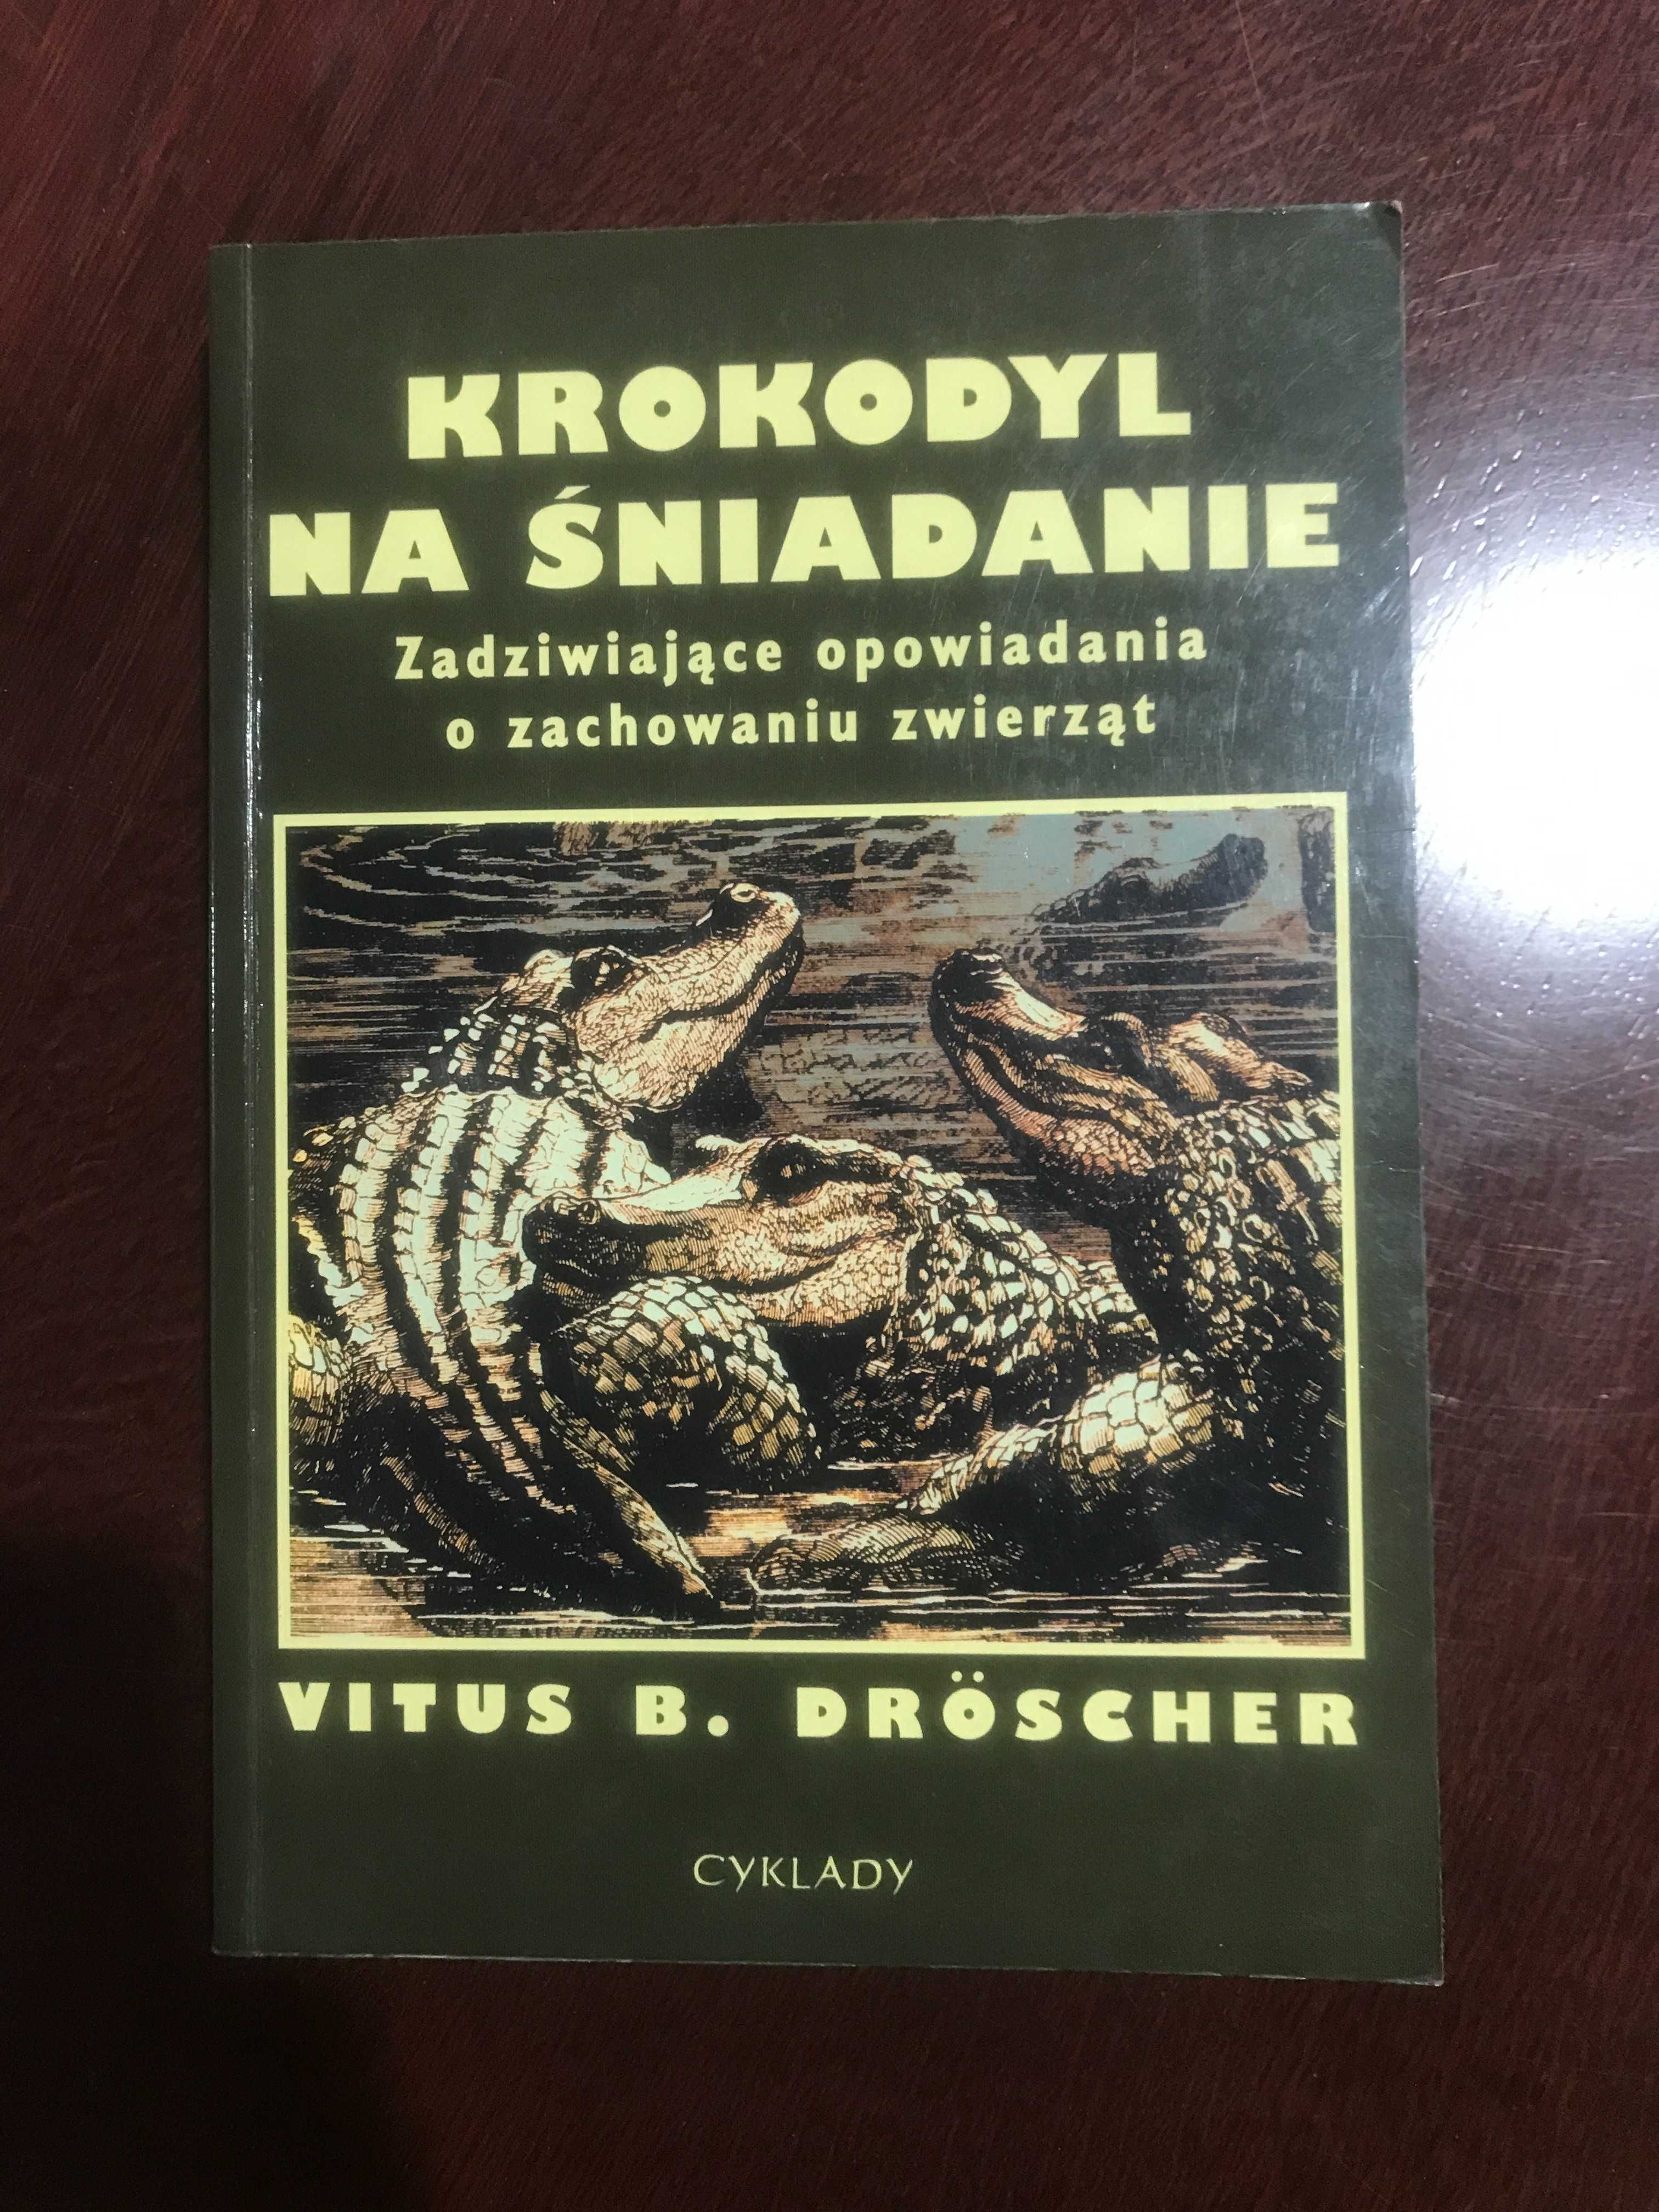 Krokodyl na śniadanie. Vitus B. Dröscher